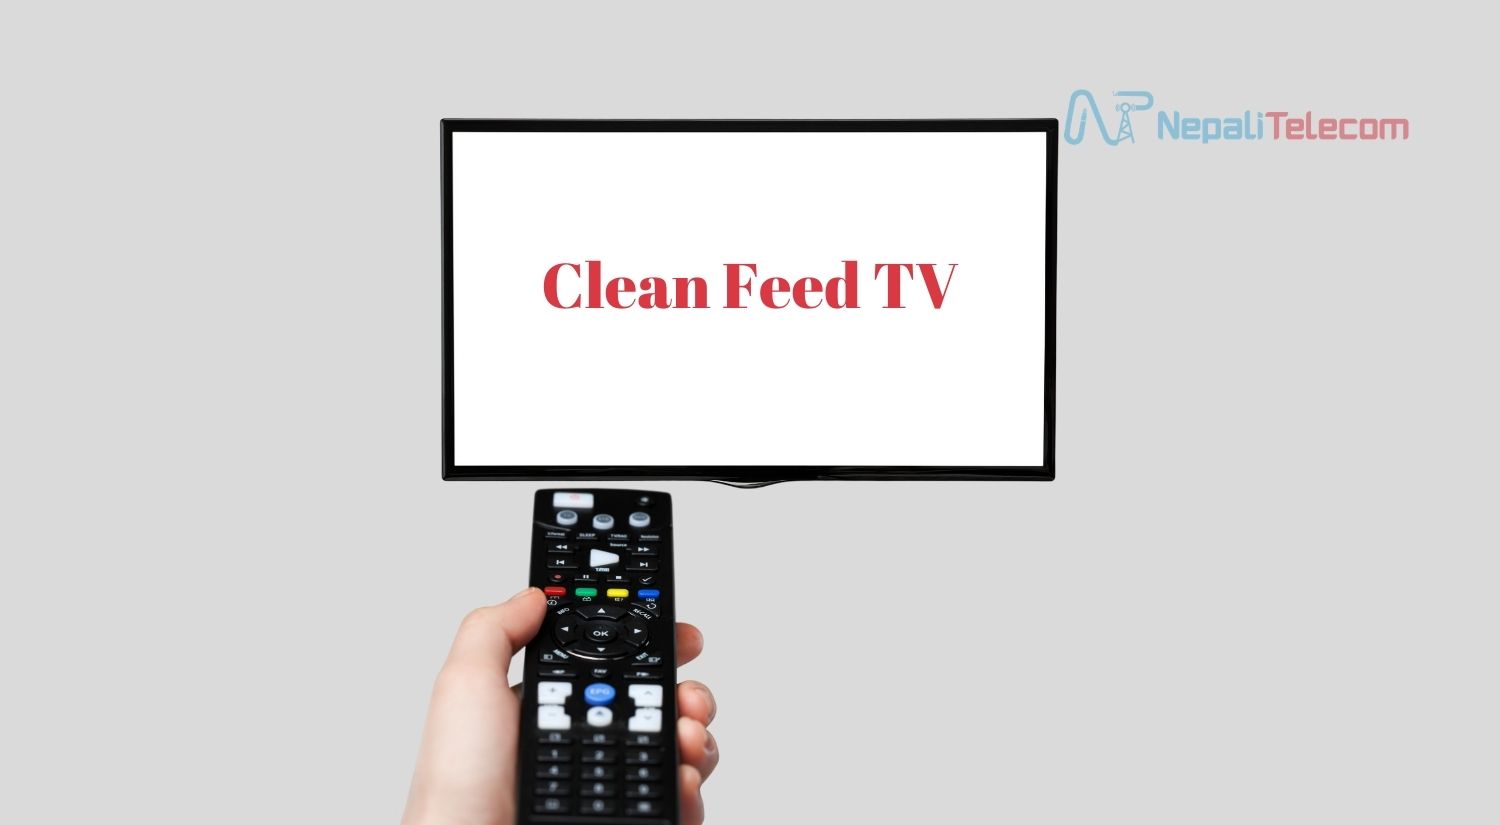 Clean Feed TV channel in Nepal